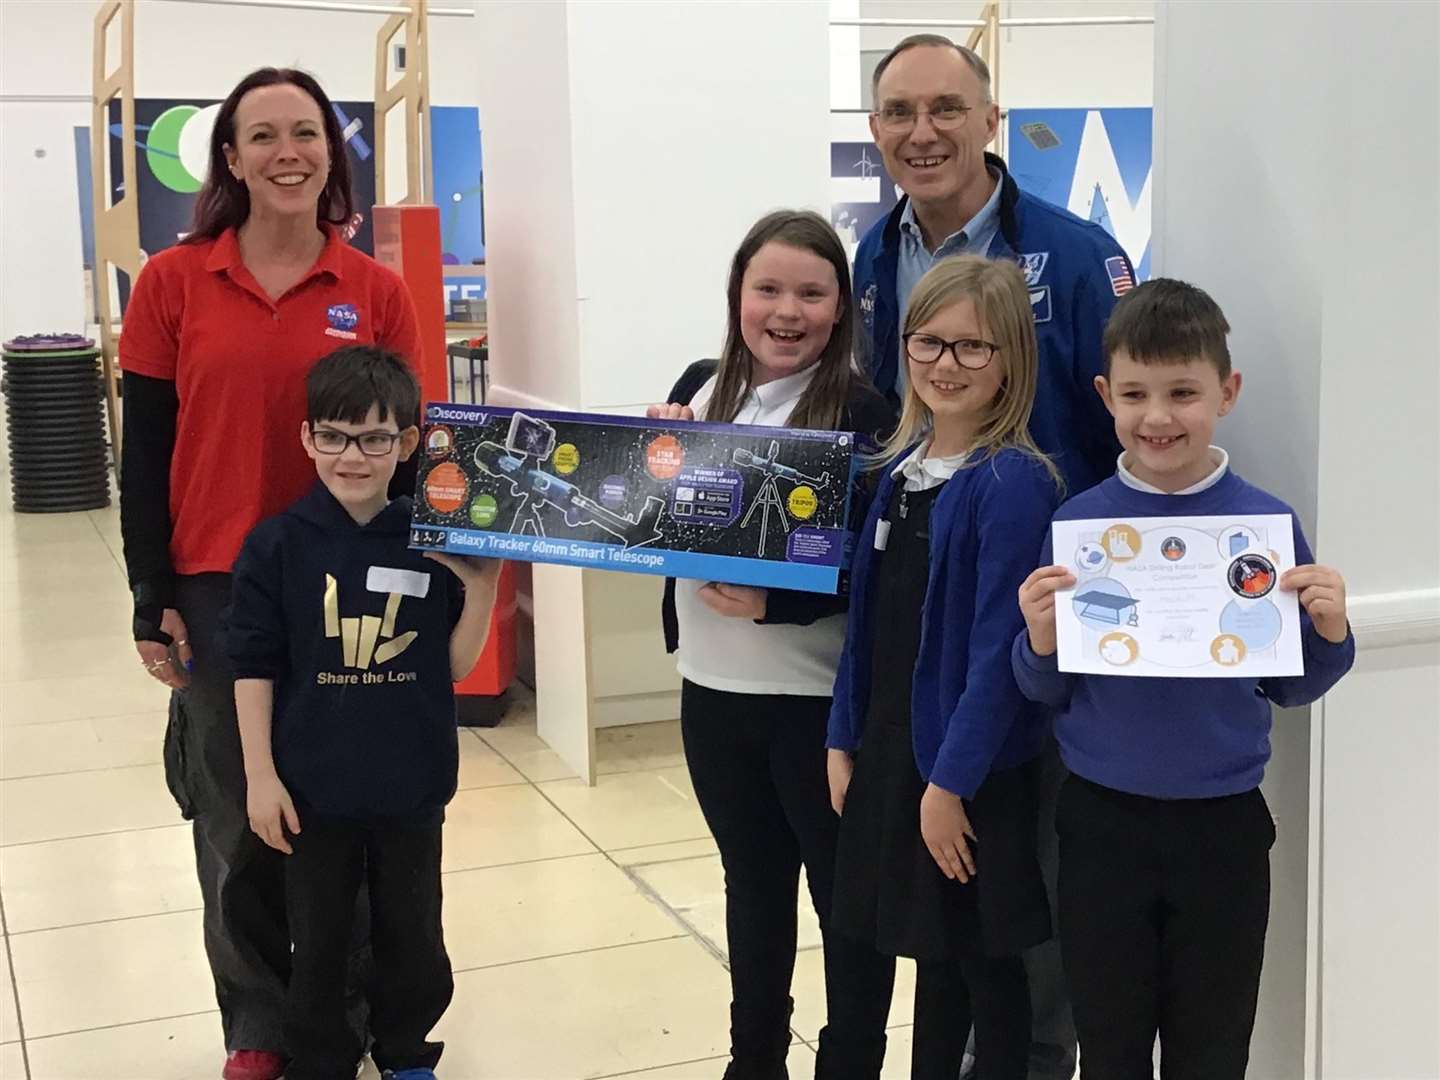 The winning Shooting Stars team from Macduff Primary School with Nasa astronaut Carl Walz and engineer Heather Paul.